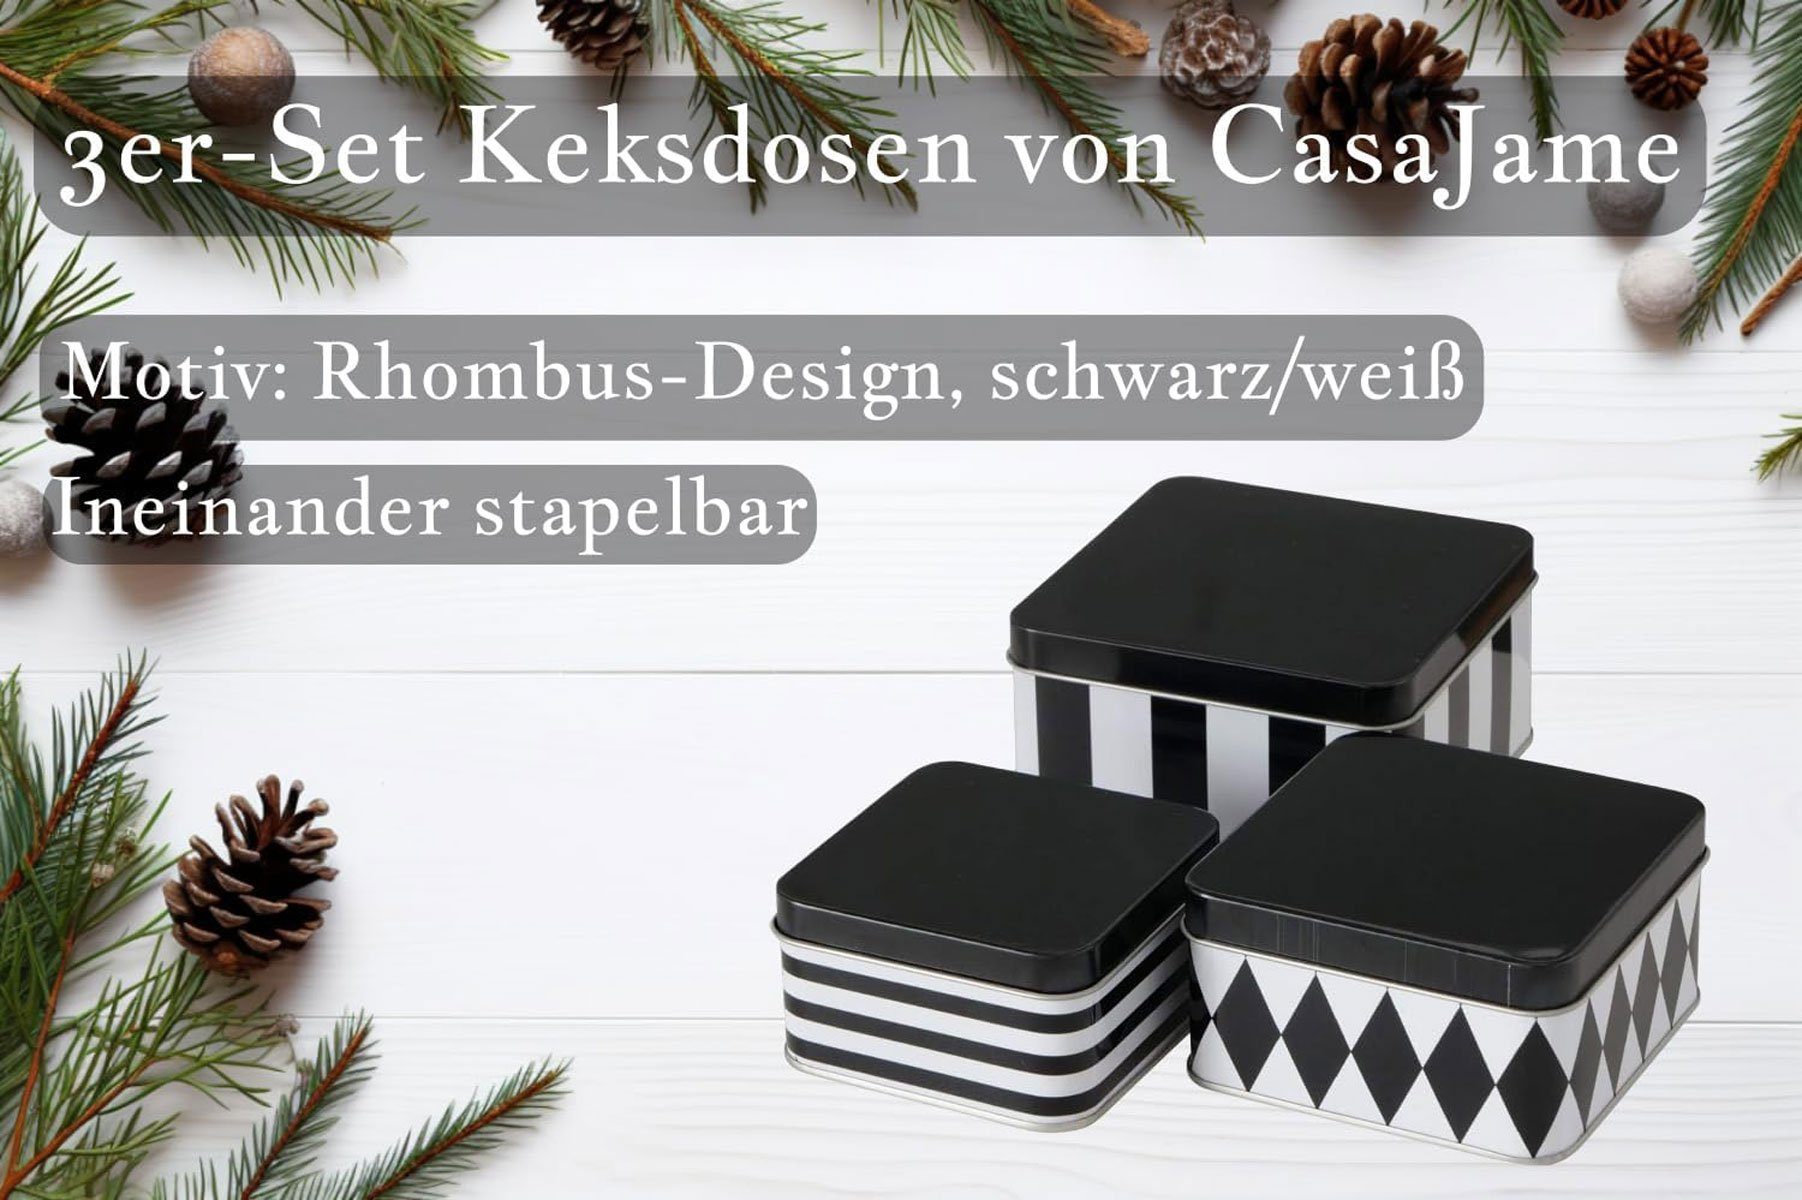 BOLTZE GRUPPE GmbH Keksdose Set Schwarz-Weiß Eckig, Metall 3er V13 Keksdosen, Rhombus-Design